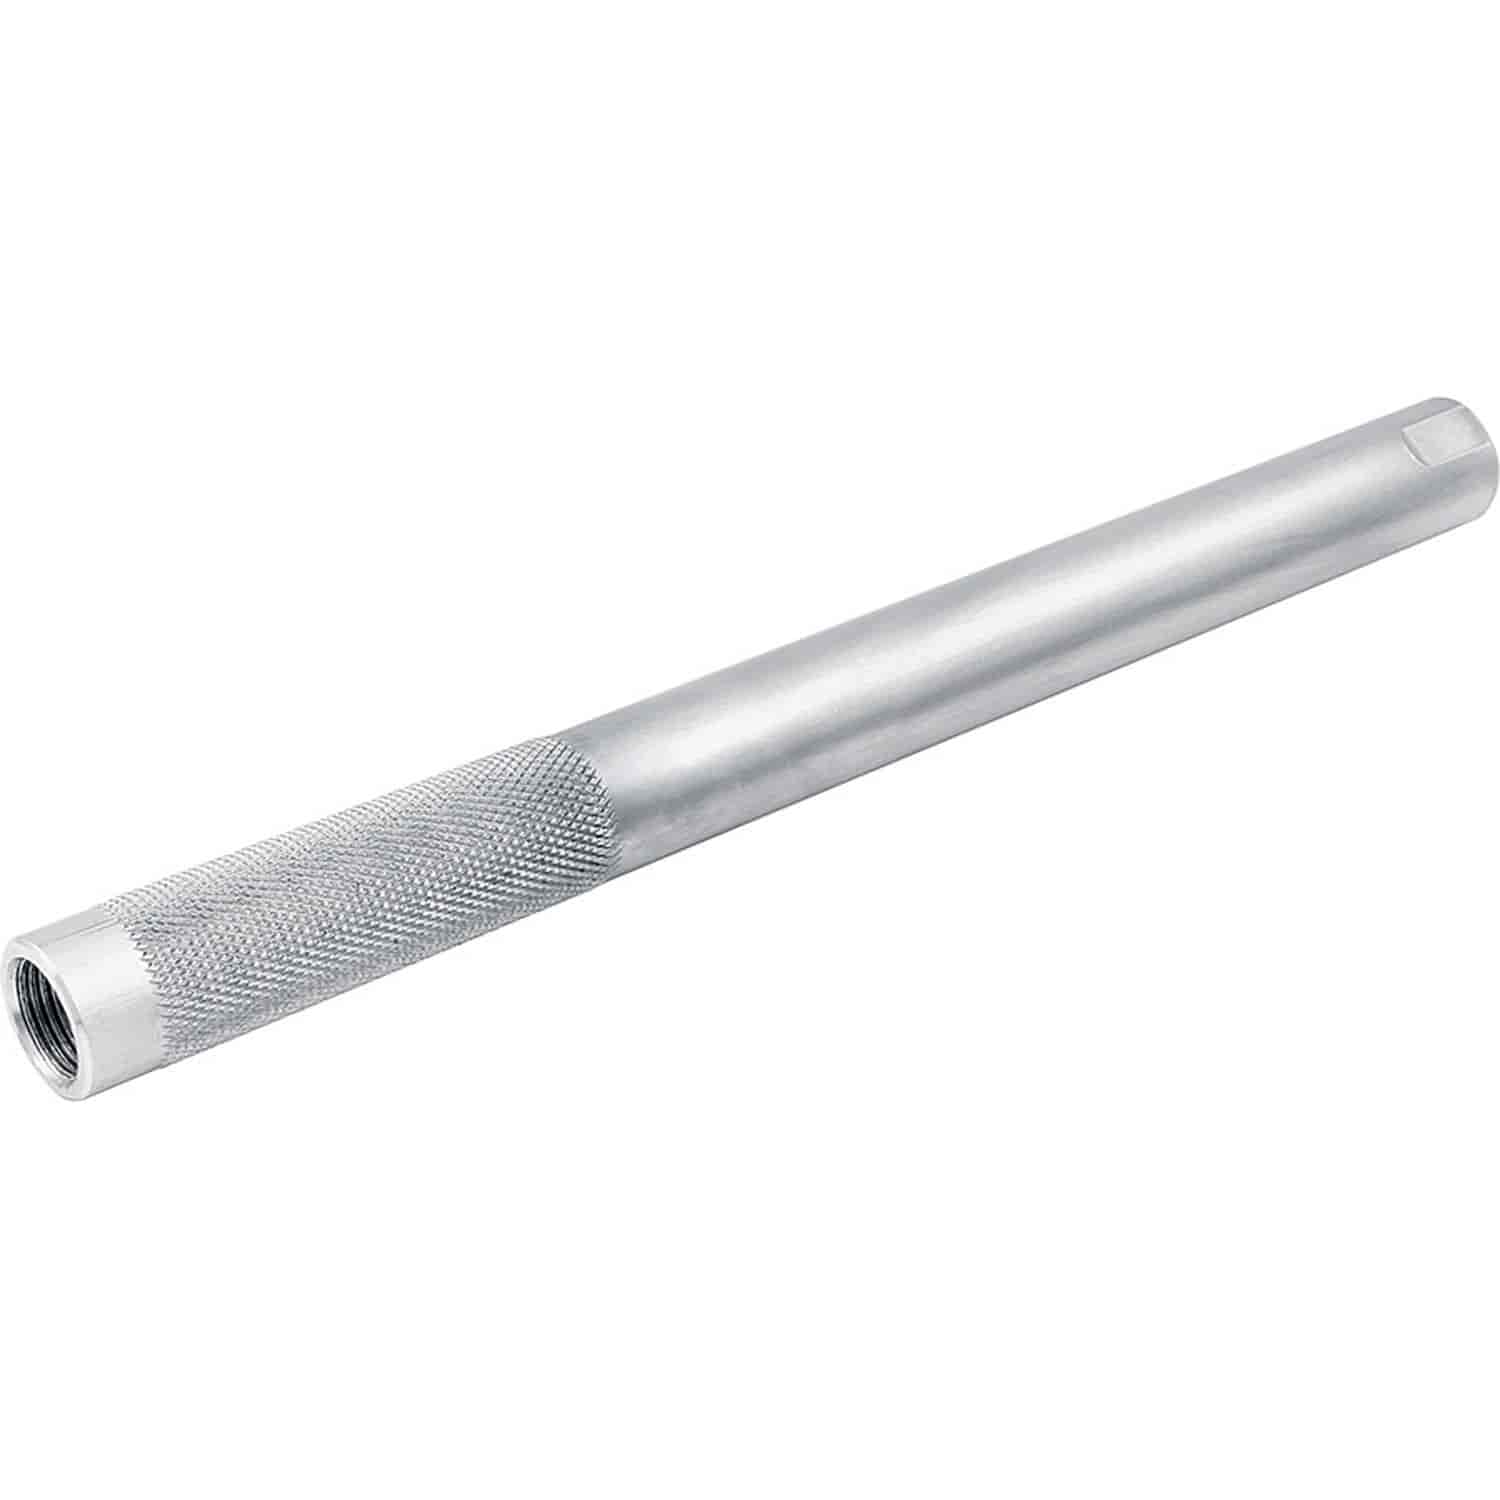 Swedged Aluminum Tie Rod Tube Length: 6"